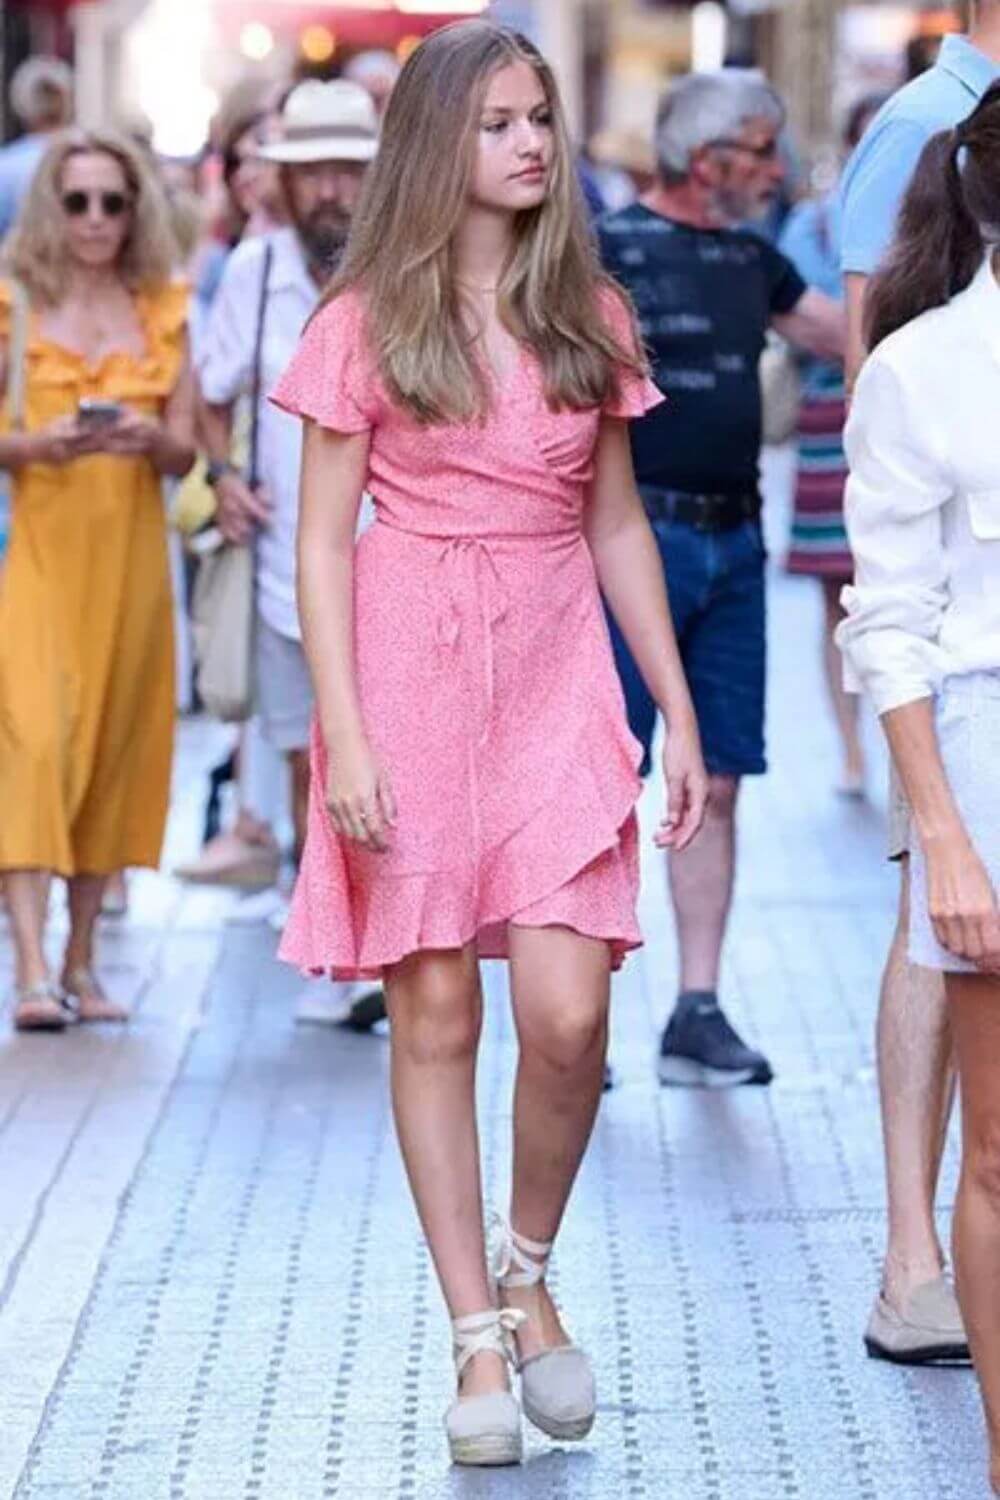 Princess Leonor's pink summer dress